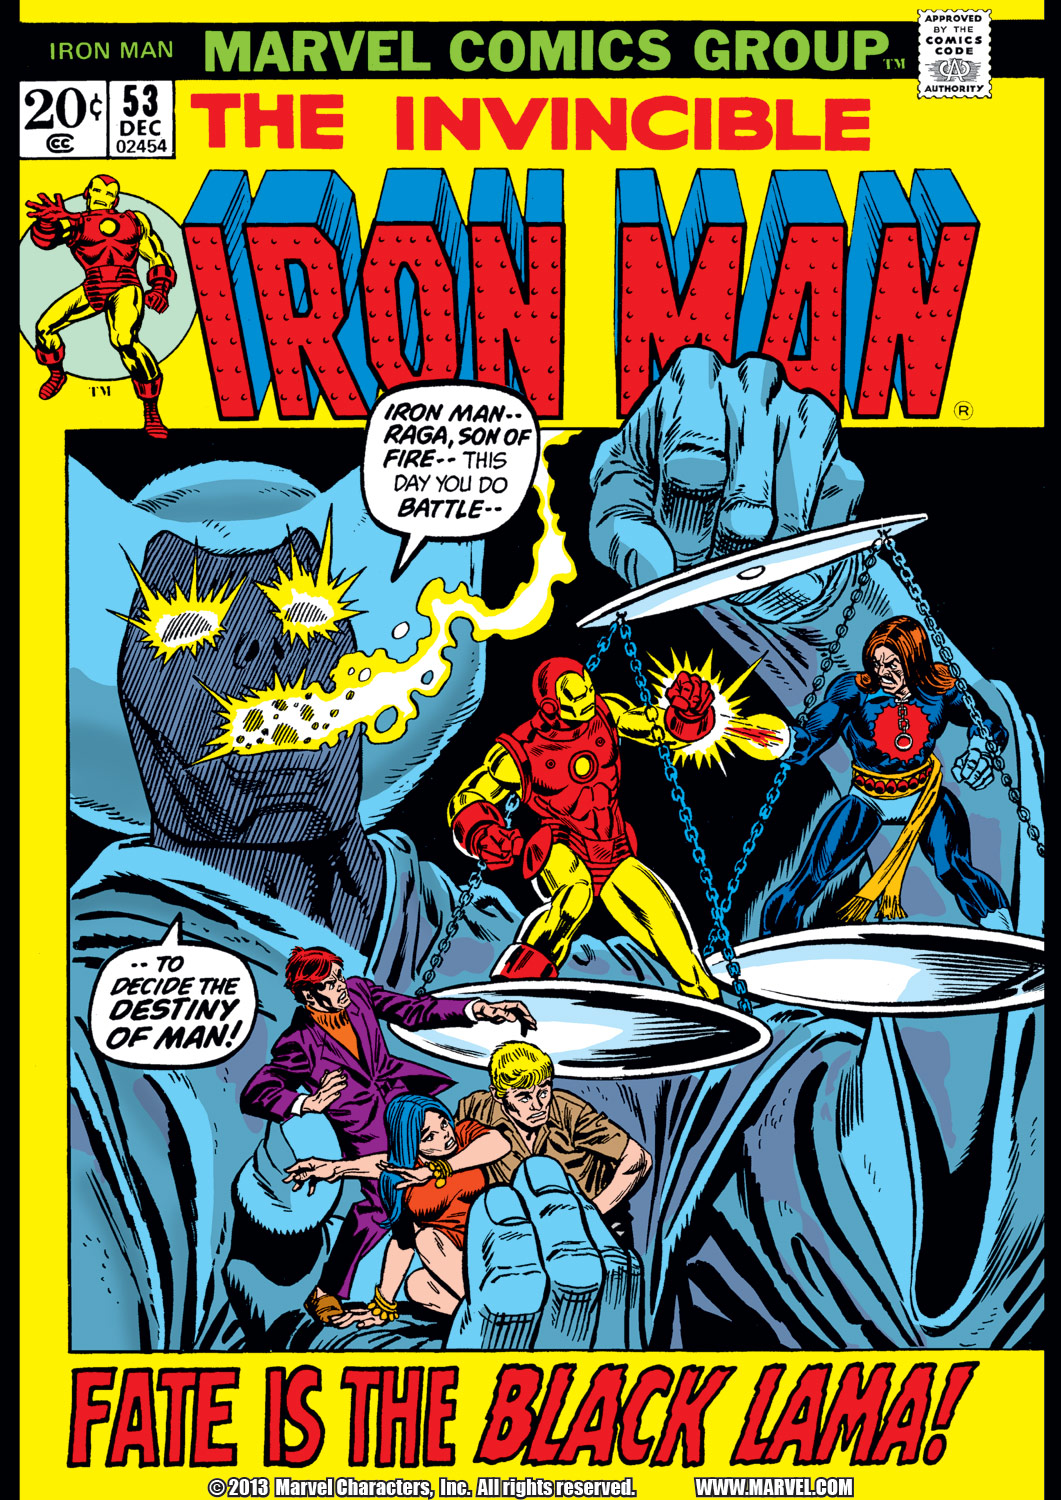 Iron Man (1968) #53